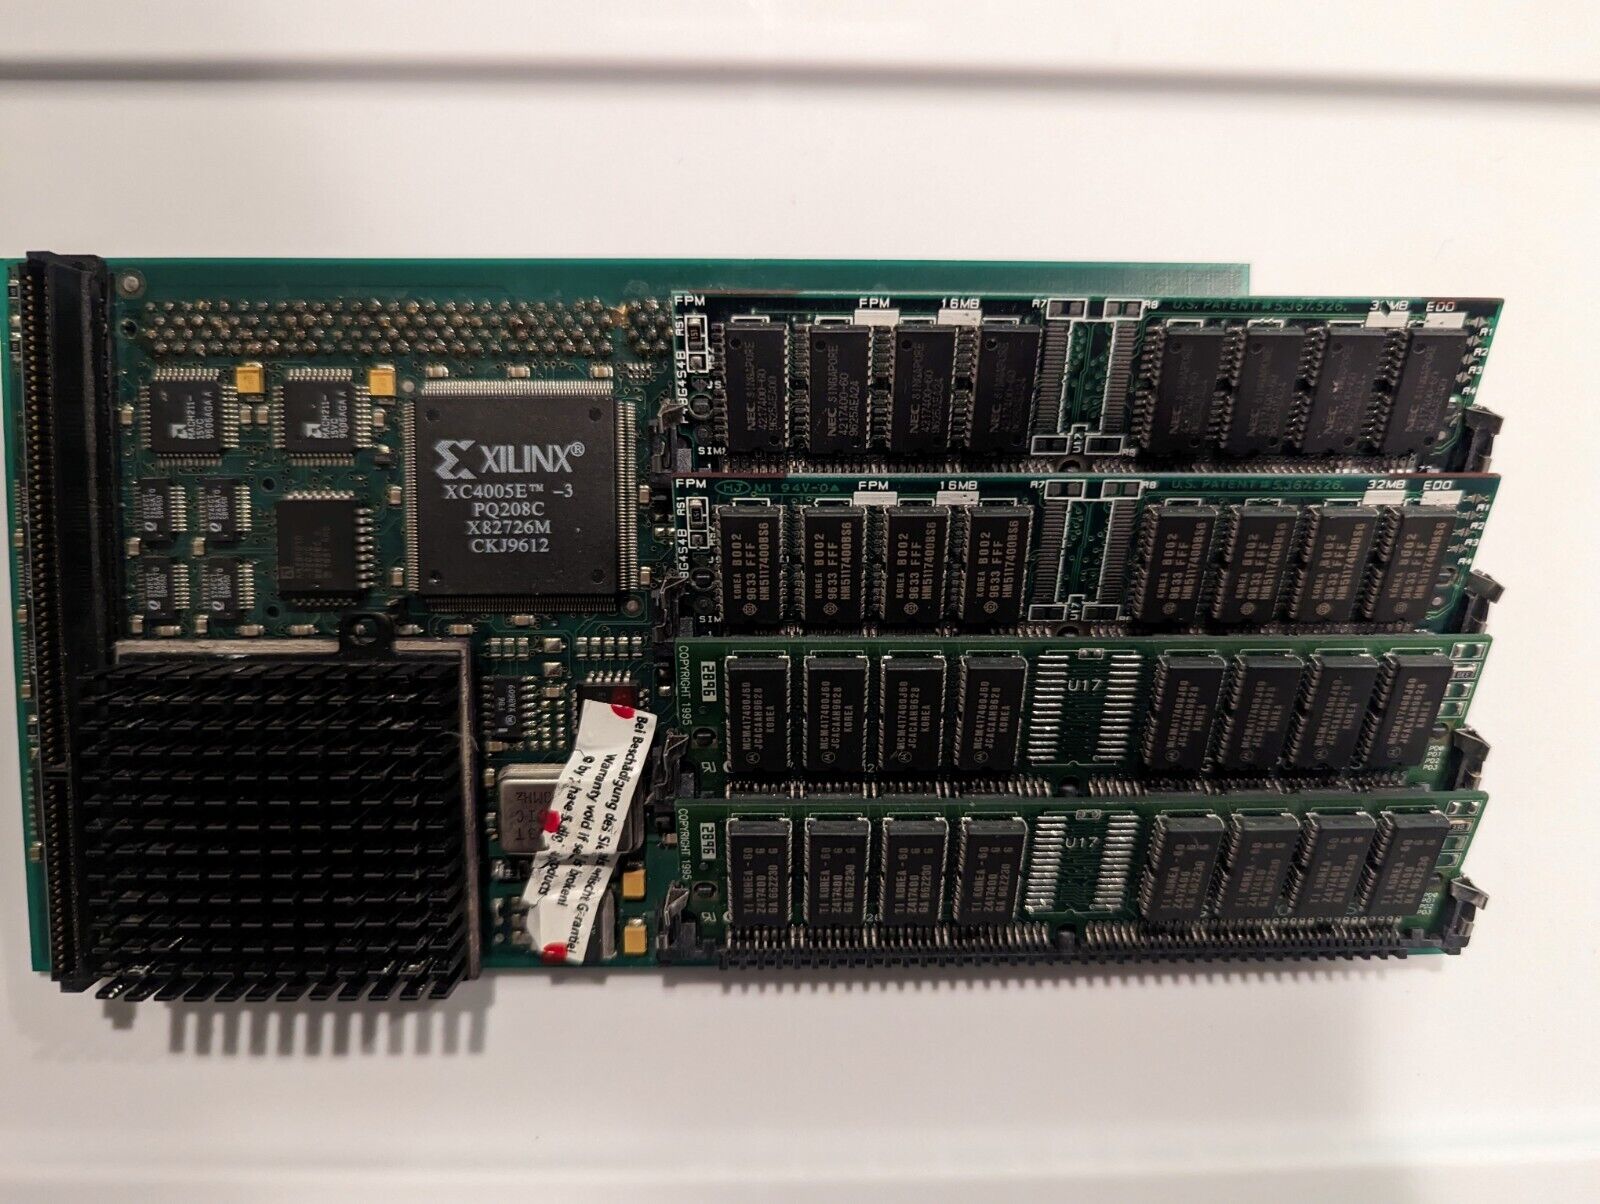 Cyberstorm MkII 68060 128meg memory Commodore Amiga Accelerator Card